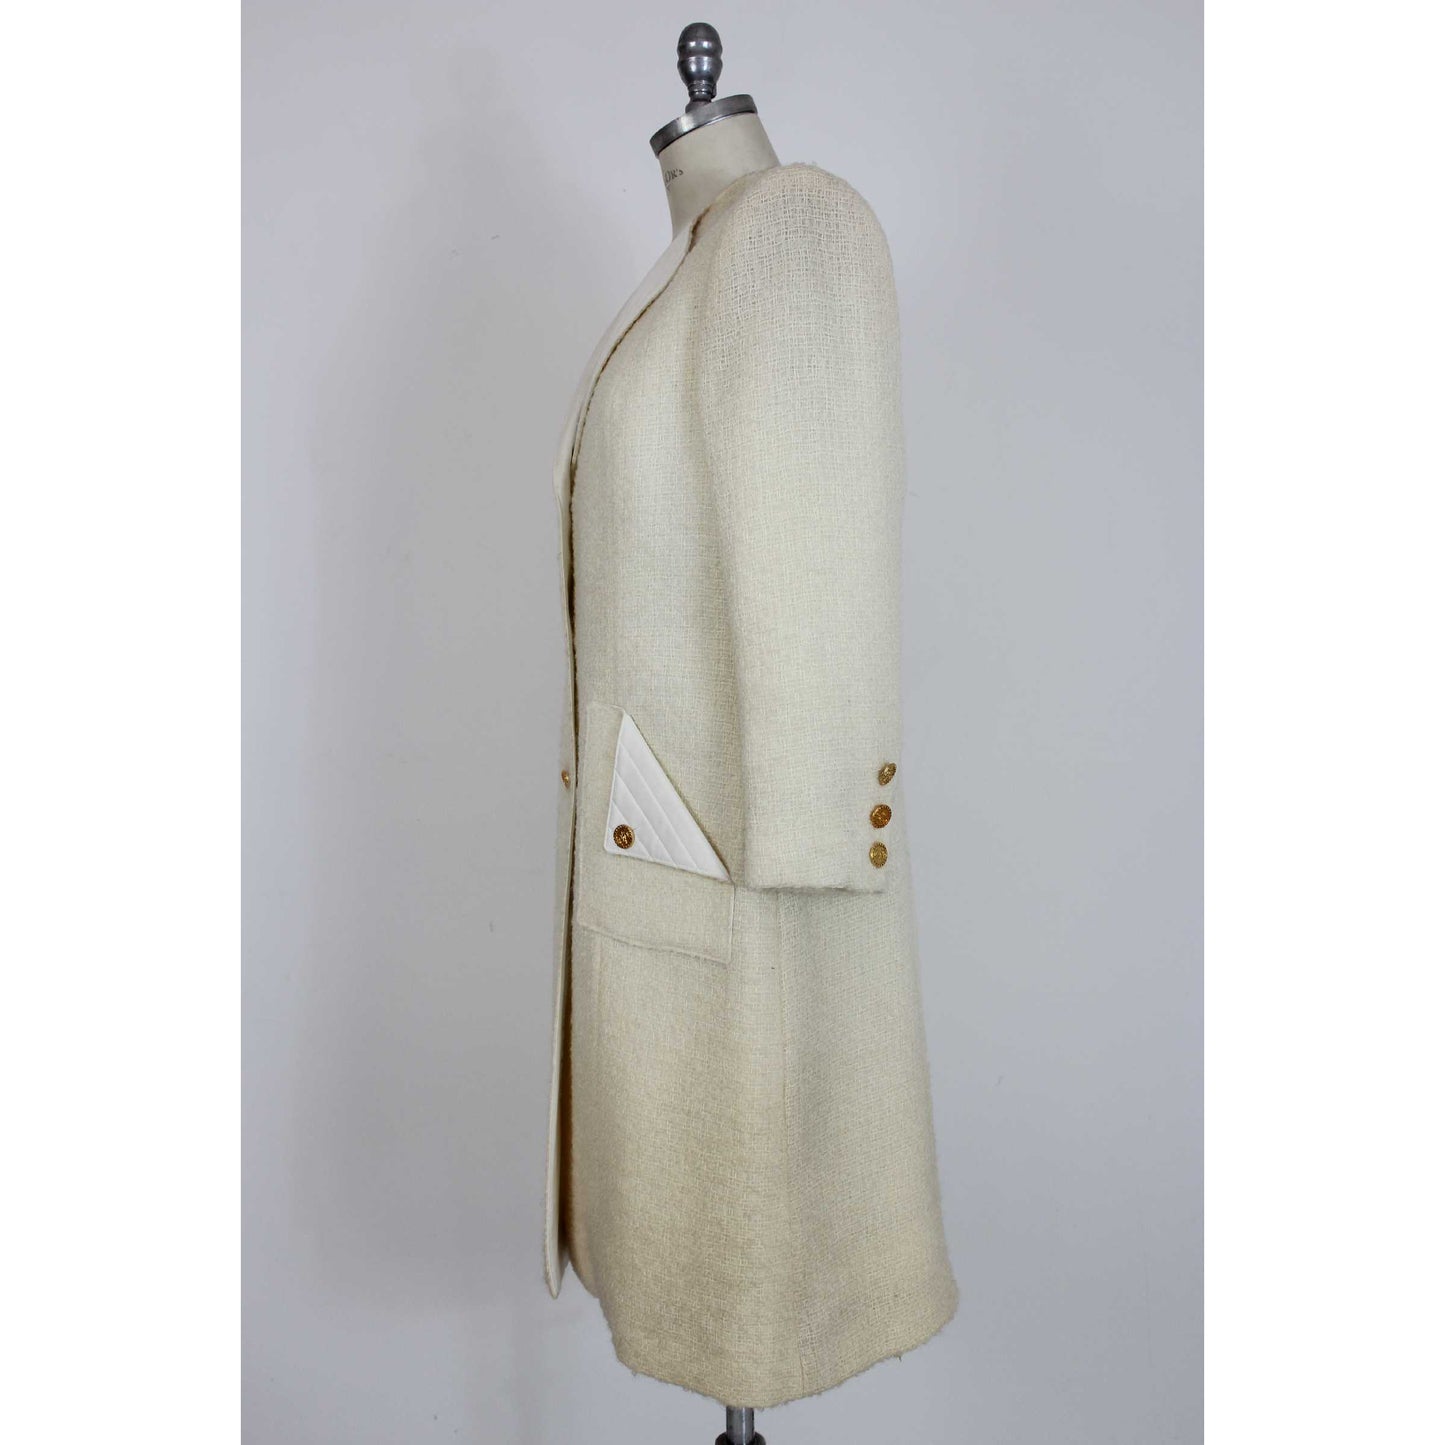 Paula Klein Vintage Wool White Long Coat